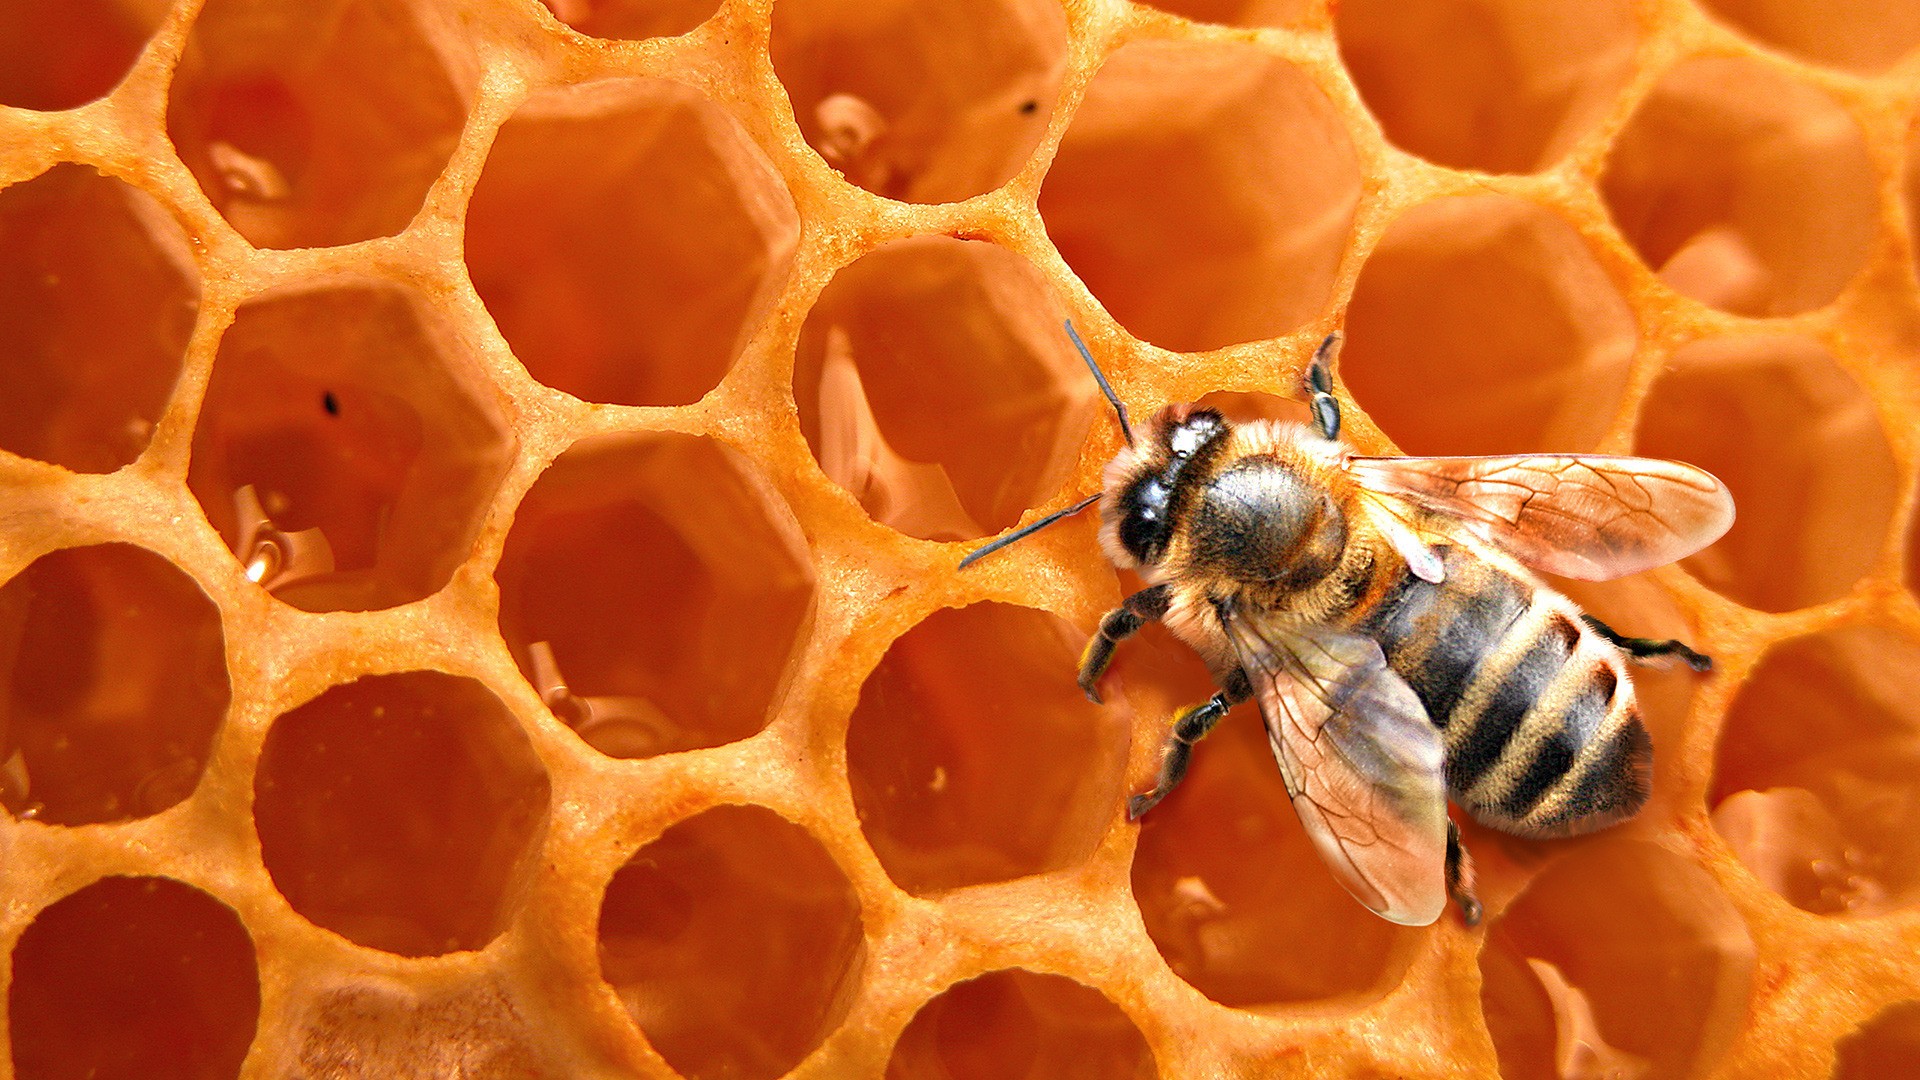 General 1920x1080 nature bees honey animals insect honeycombs closeup macro